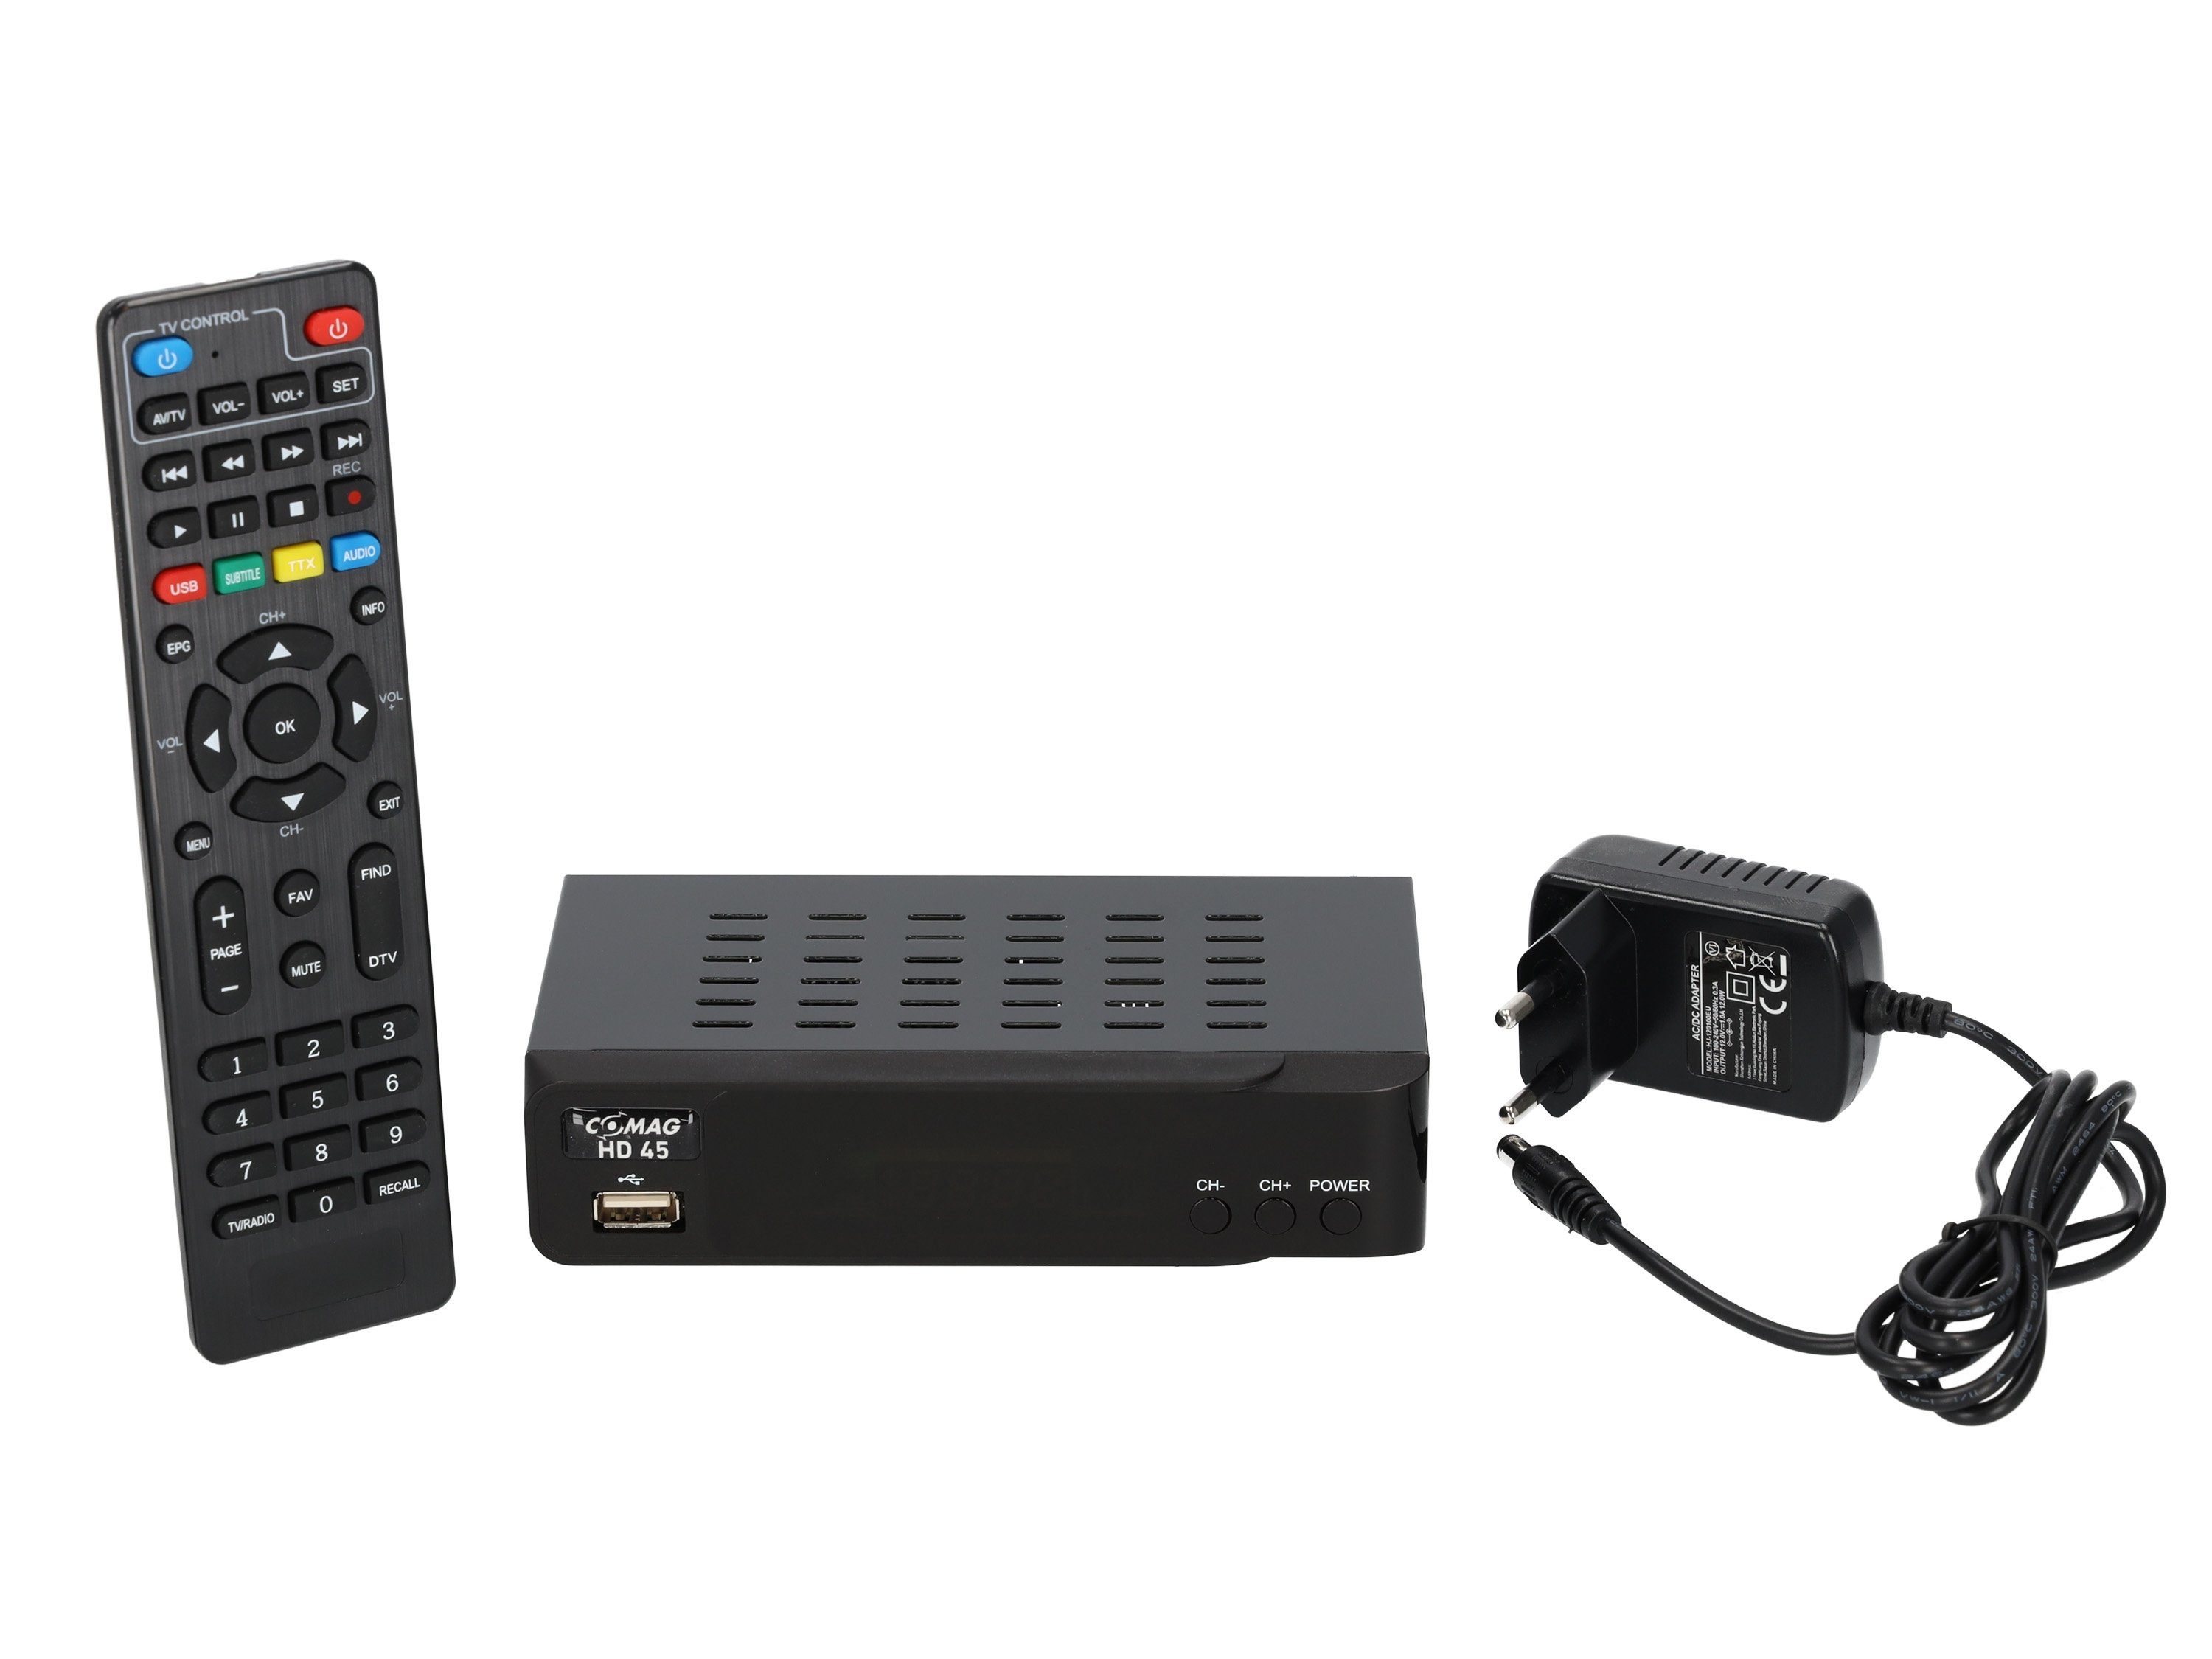 1080p HDTV SAT-Receiver DVB-S2) Full HD45, (USB, Comag HDMI, Scart DVB-S2